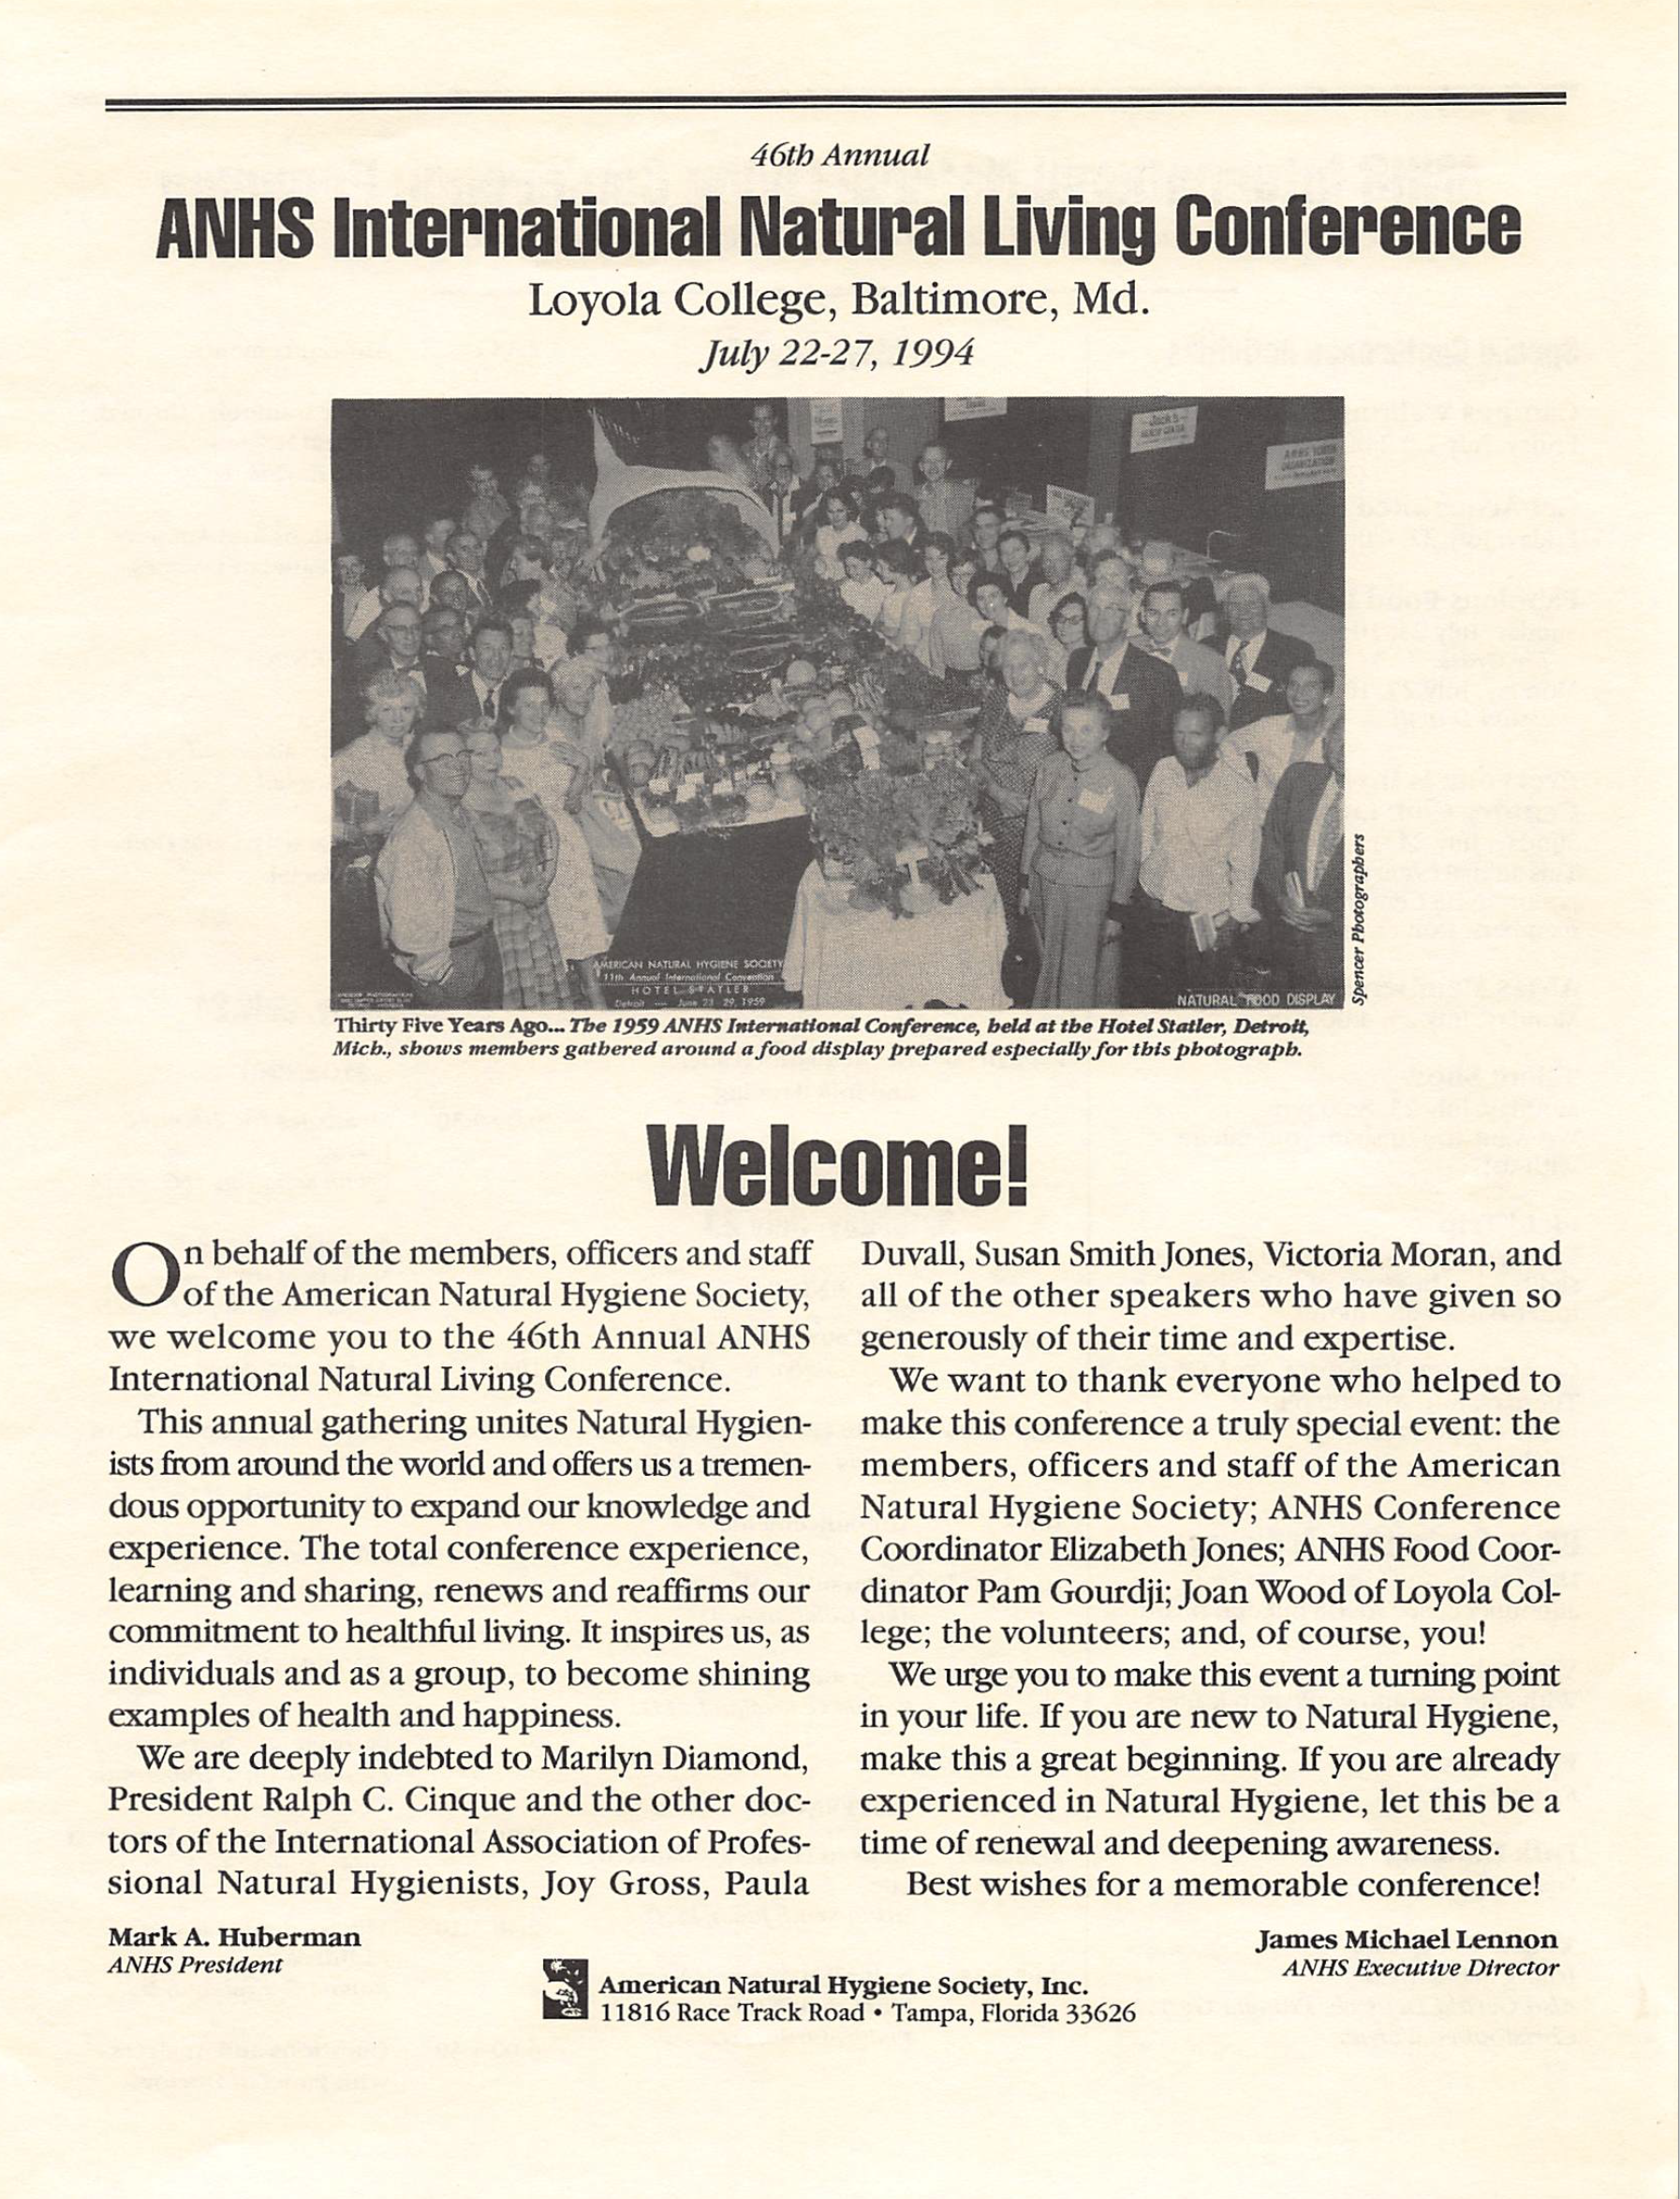 Conference Program. Baltimore, 1994